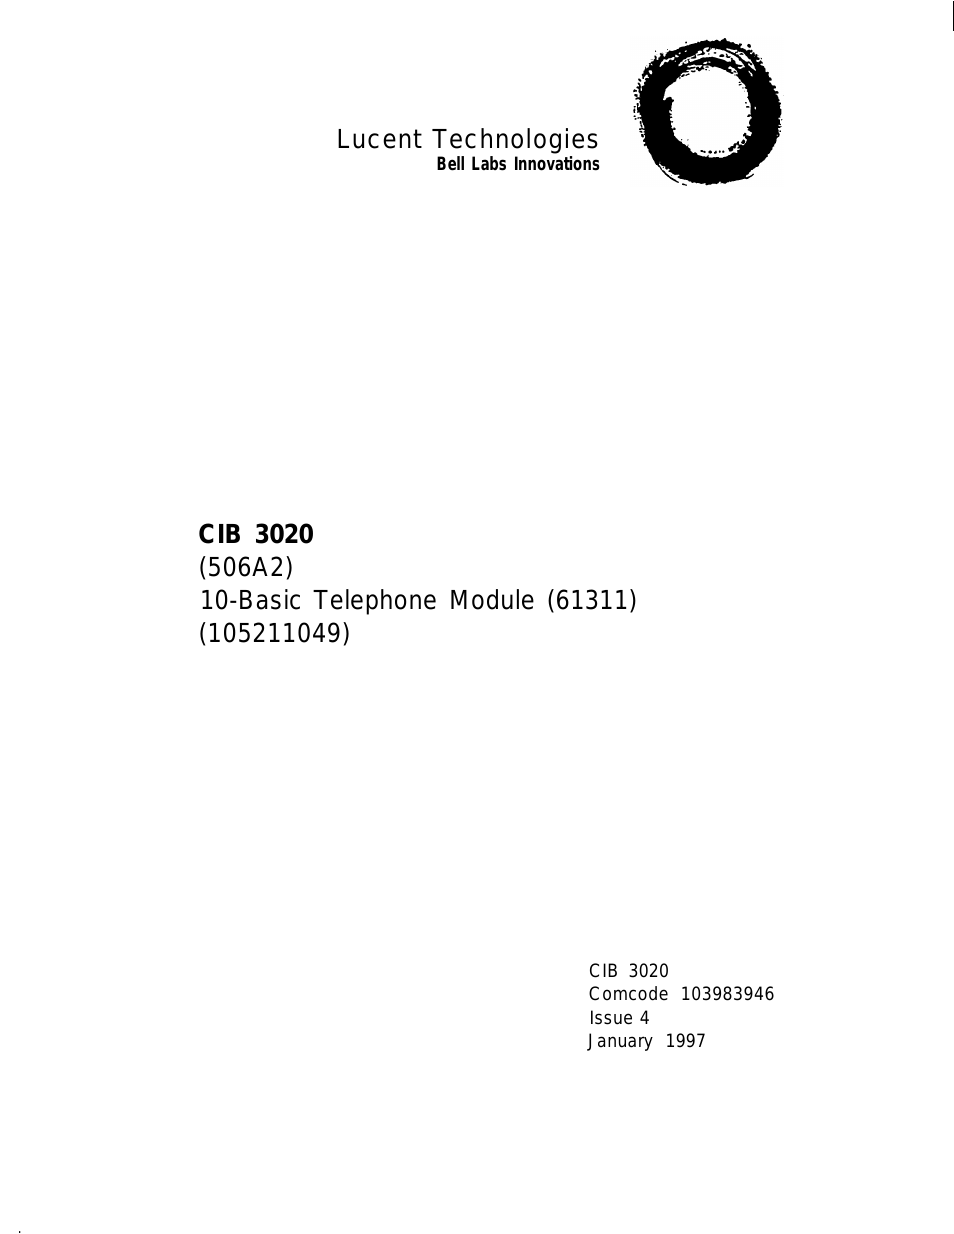 Basic Telephone Module CIB 3020